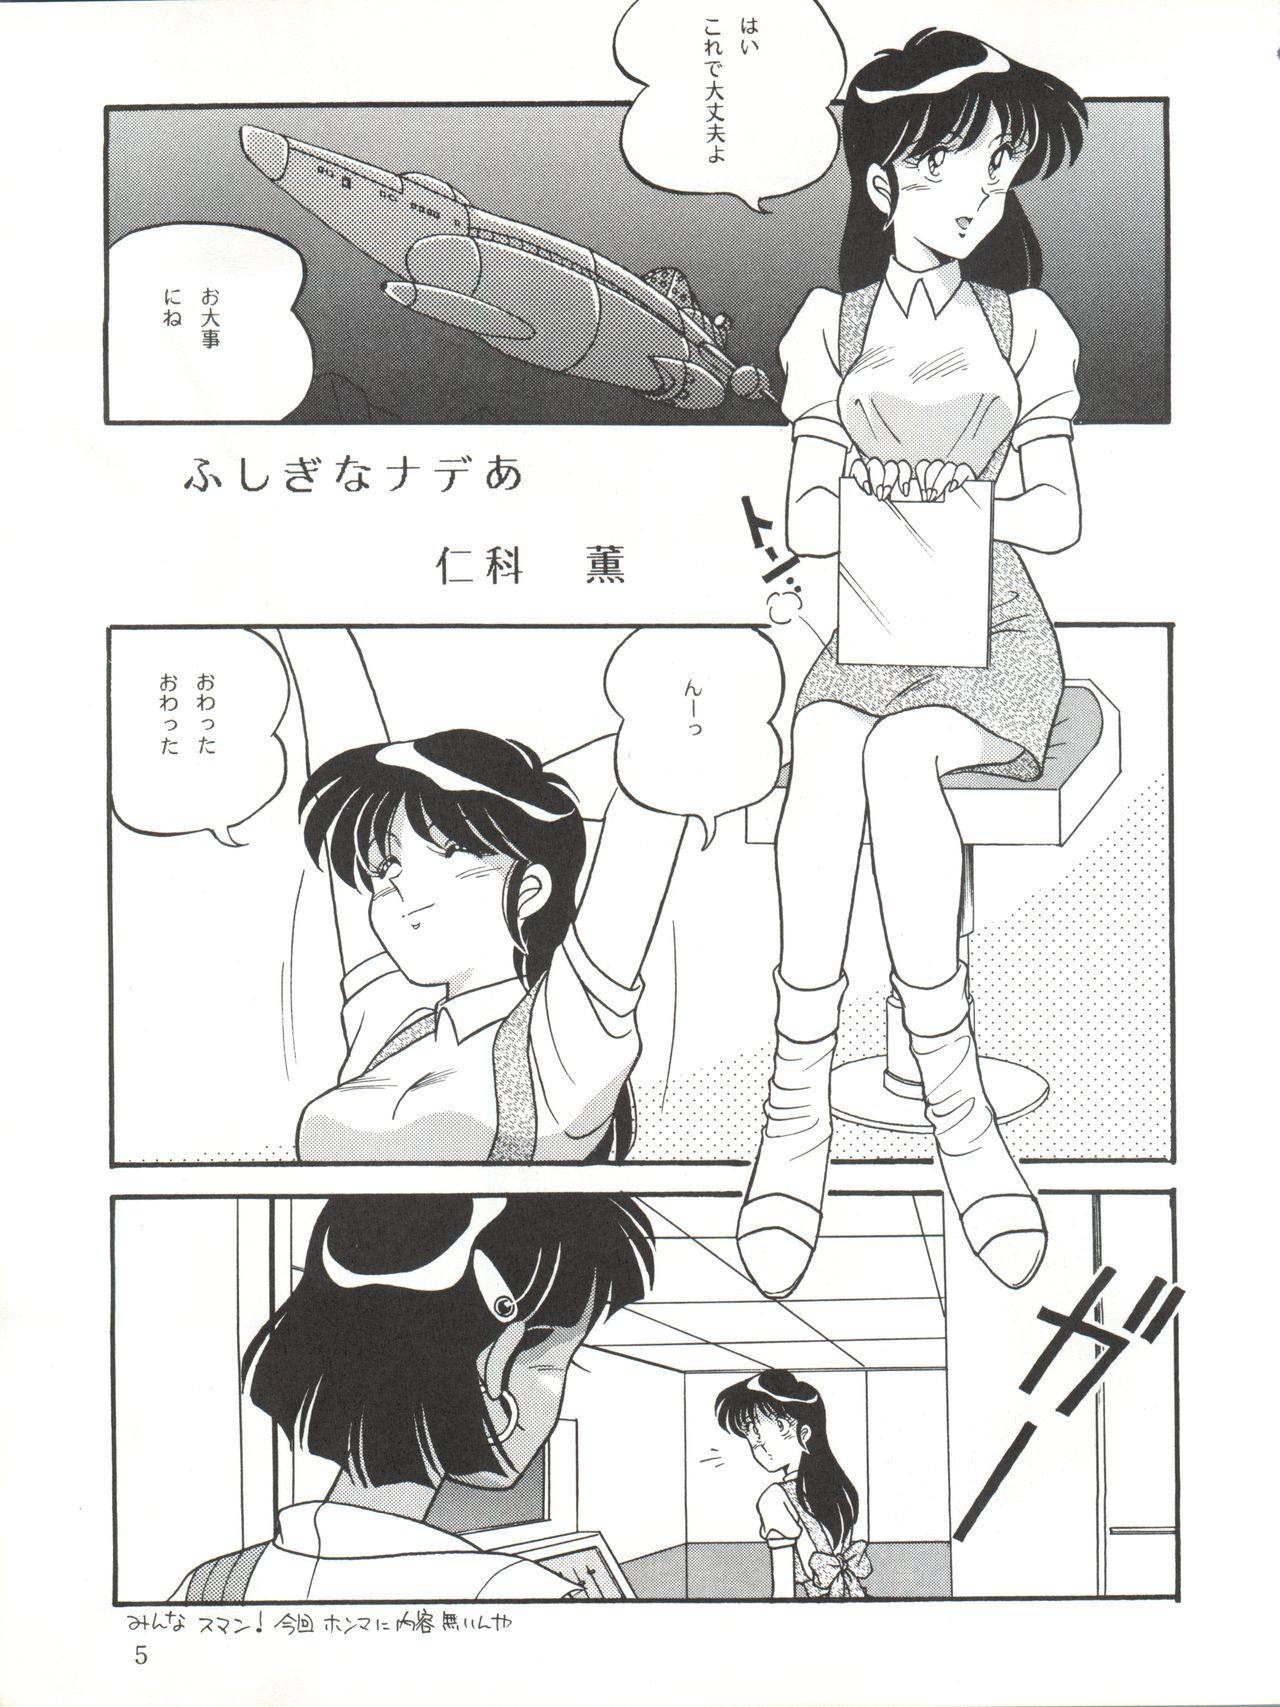 Women Sucking Dicks Vocalization 2 - Fushigi no umi no nadia Rope - Page 5